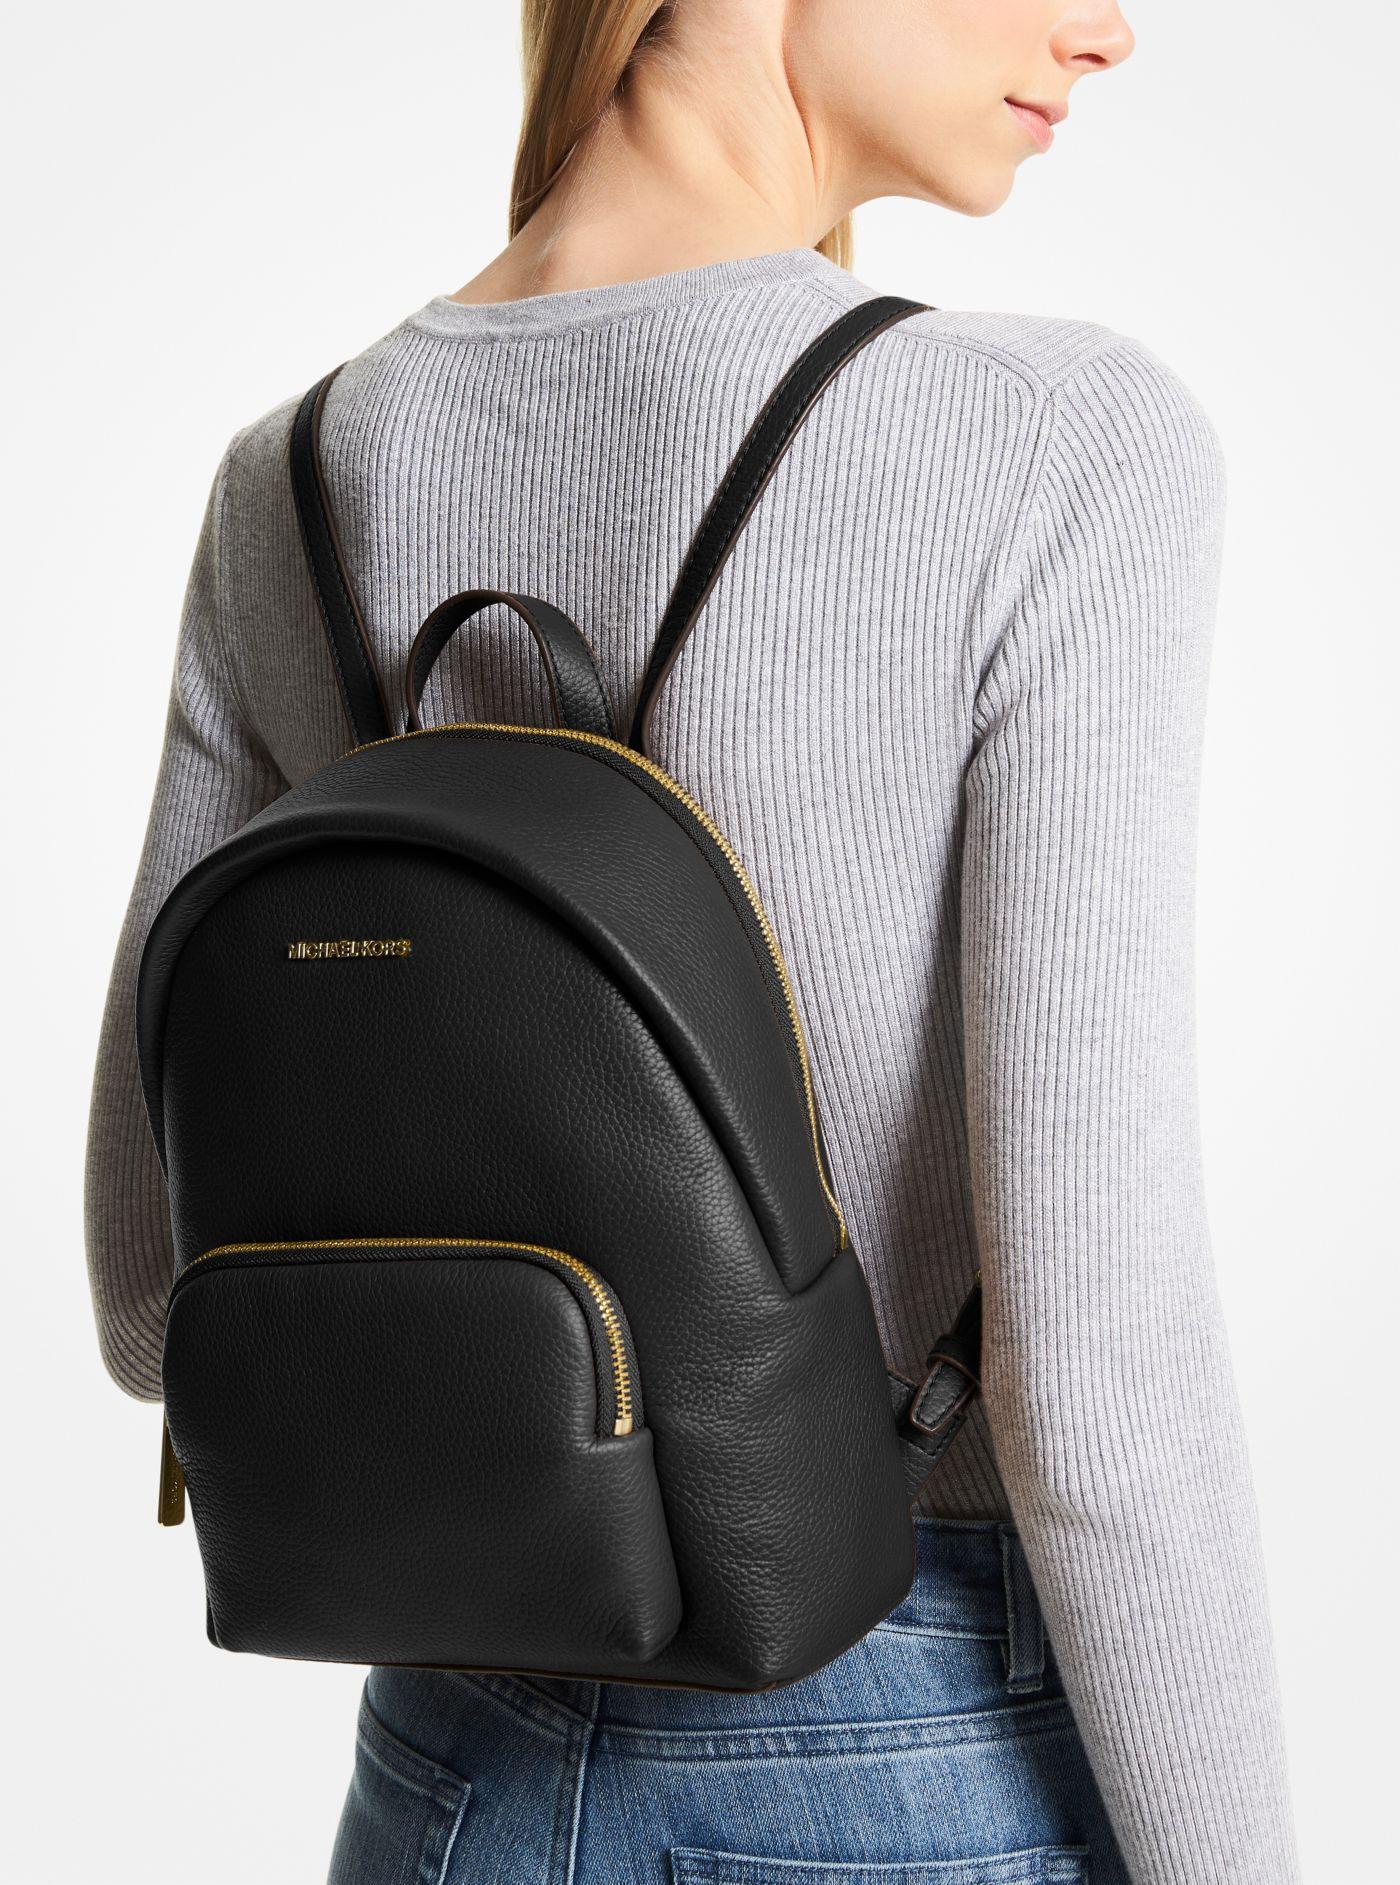 Michael Kors Erin Medium Pebbled Leather Backpack in Black | Lyst